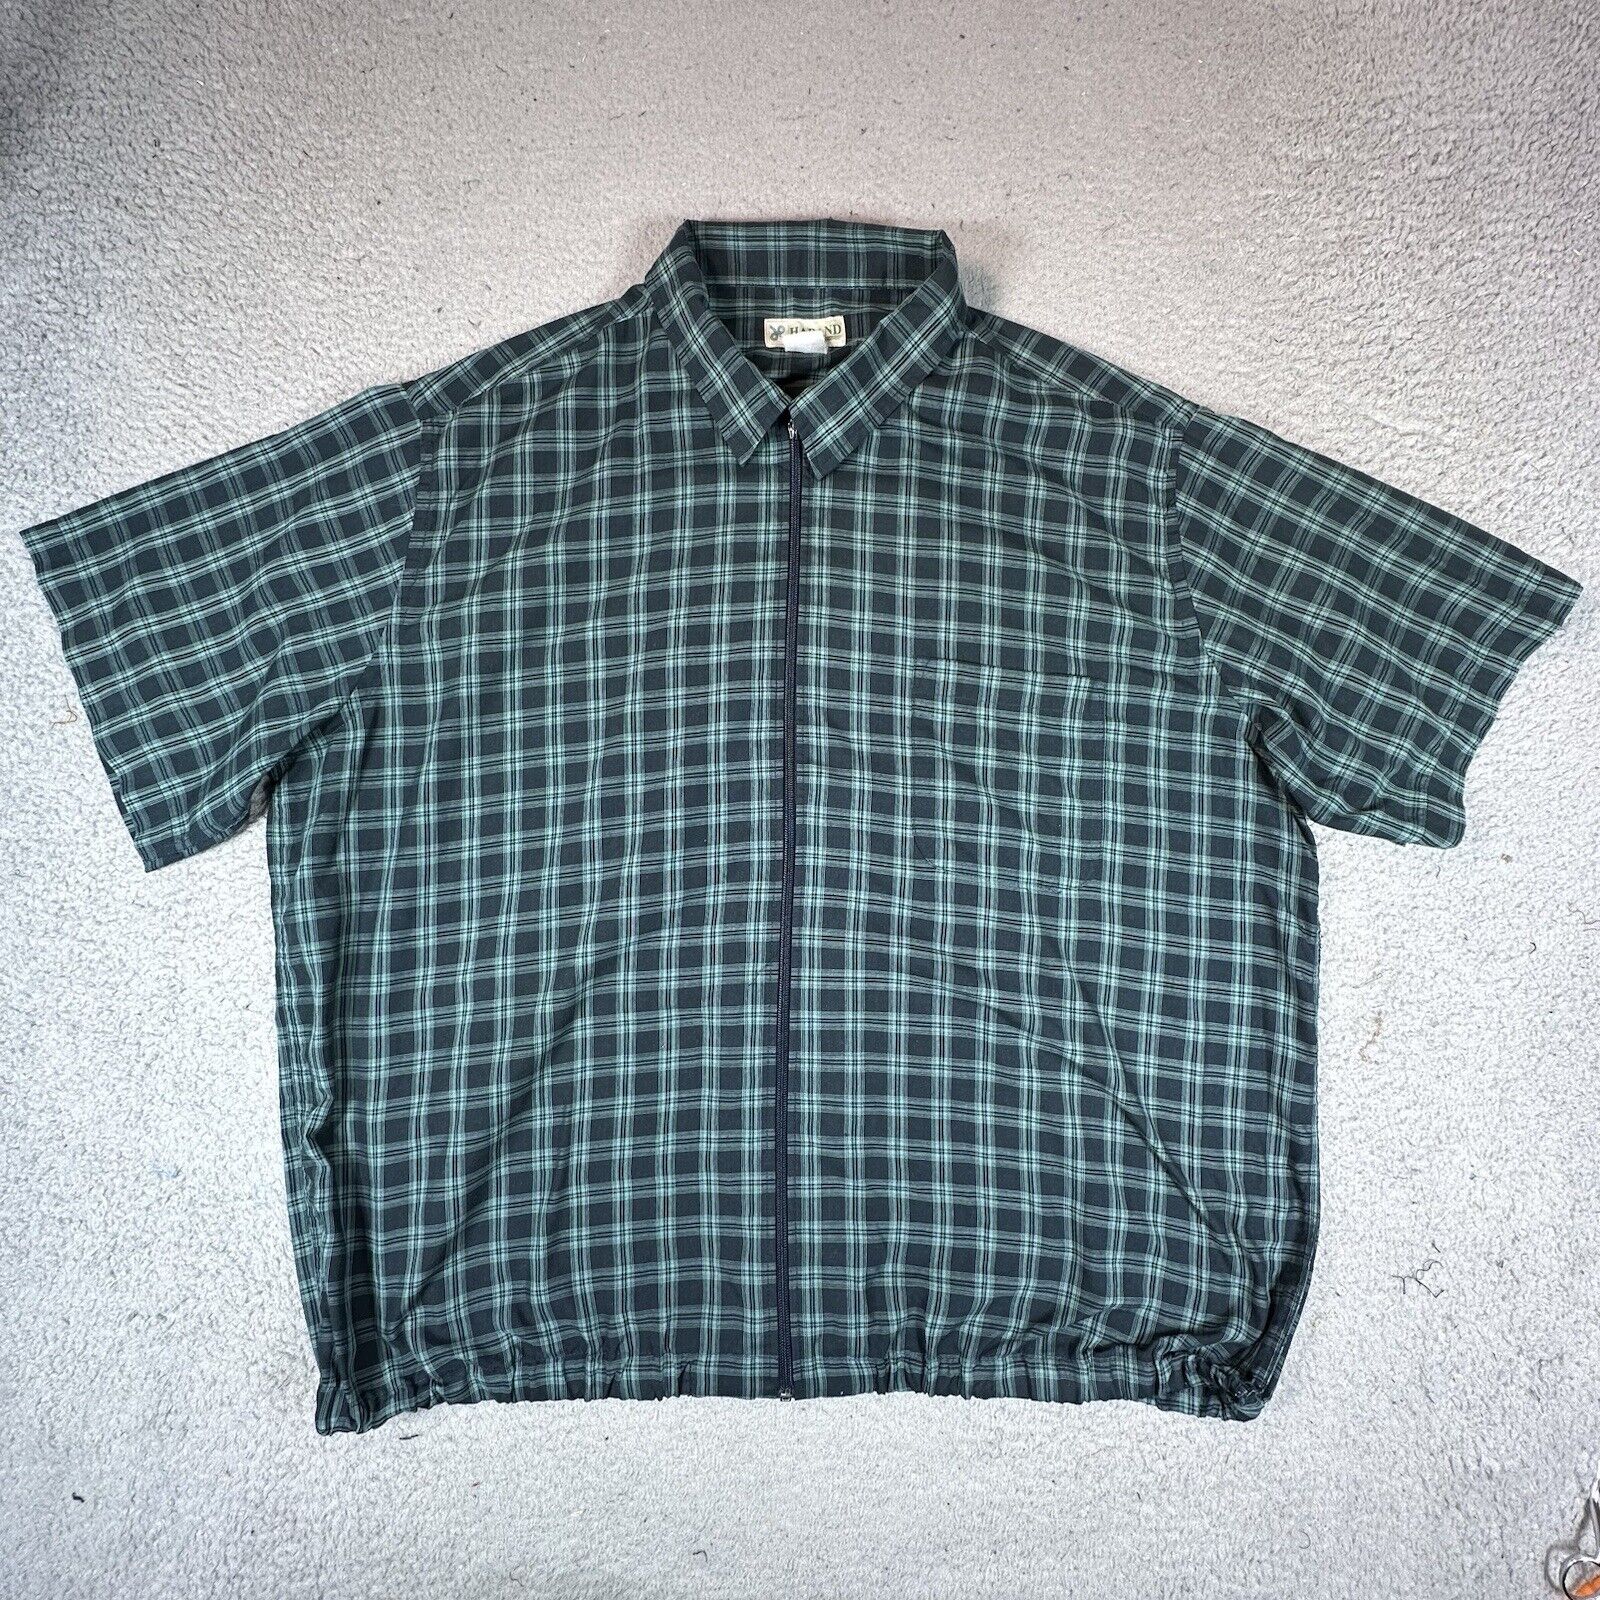 Haband Mens Shirt Size XL Green Black Plaid Zip Front Short Sleeve Vintage